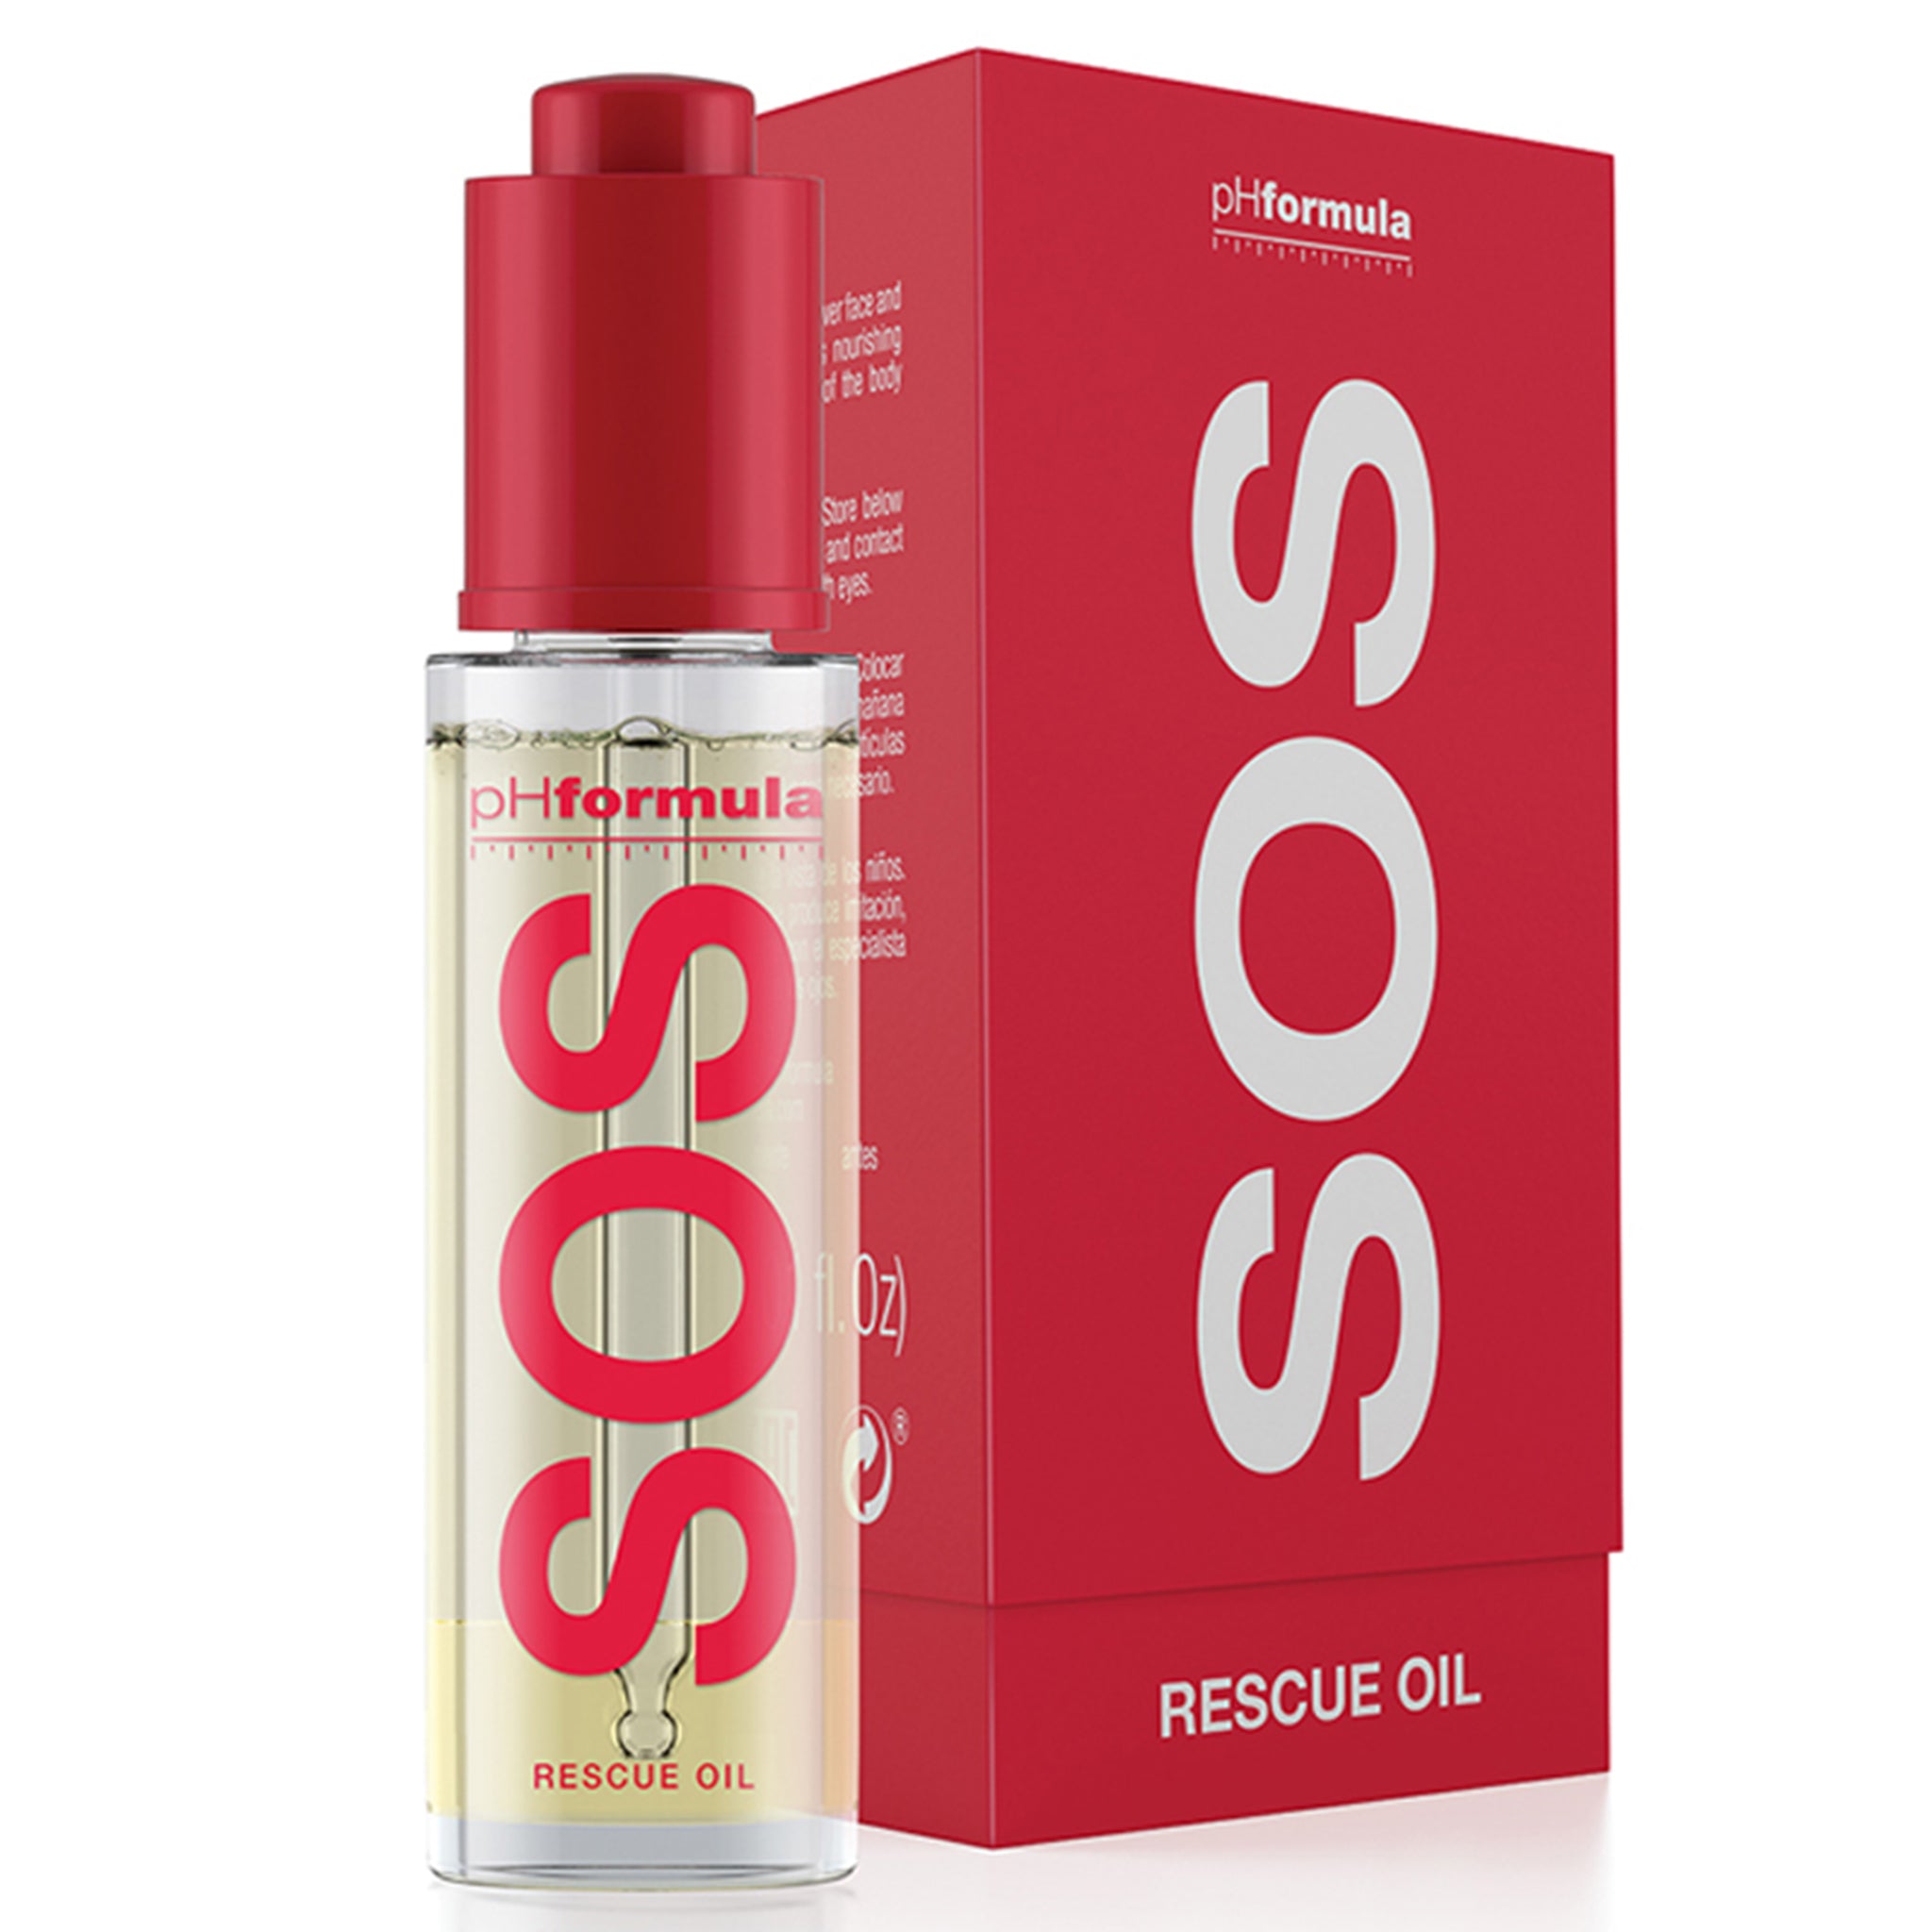 pHformula SOS rescue oil | Holistic Beauty